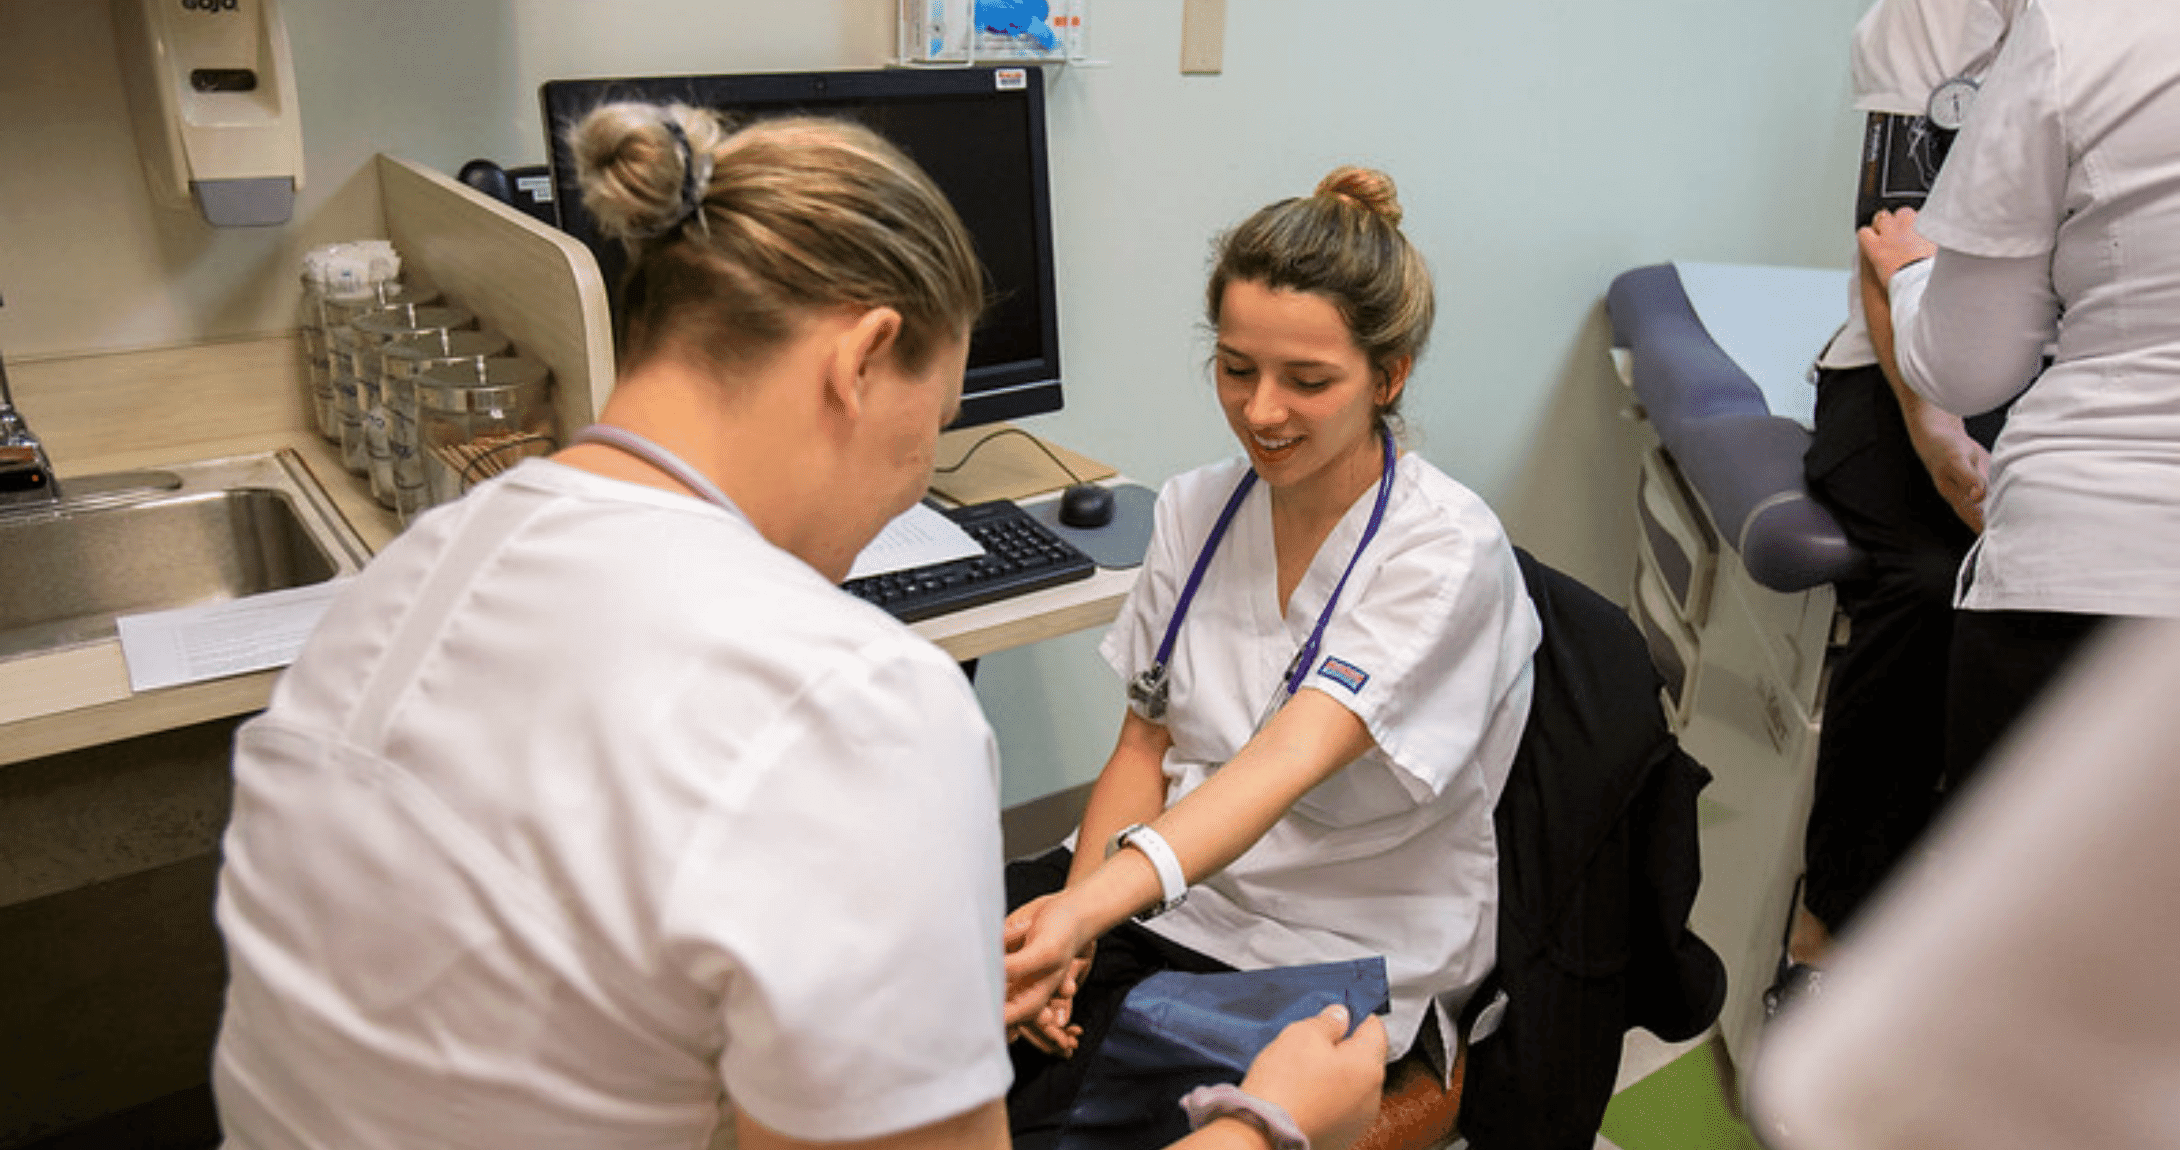 Nursing students taking blood pressure